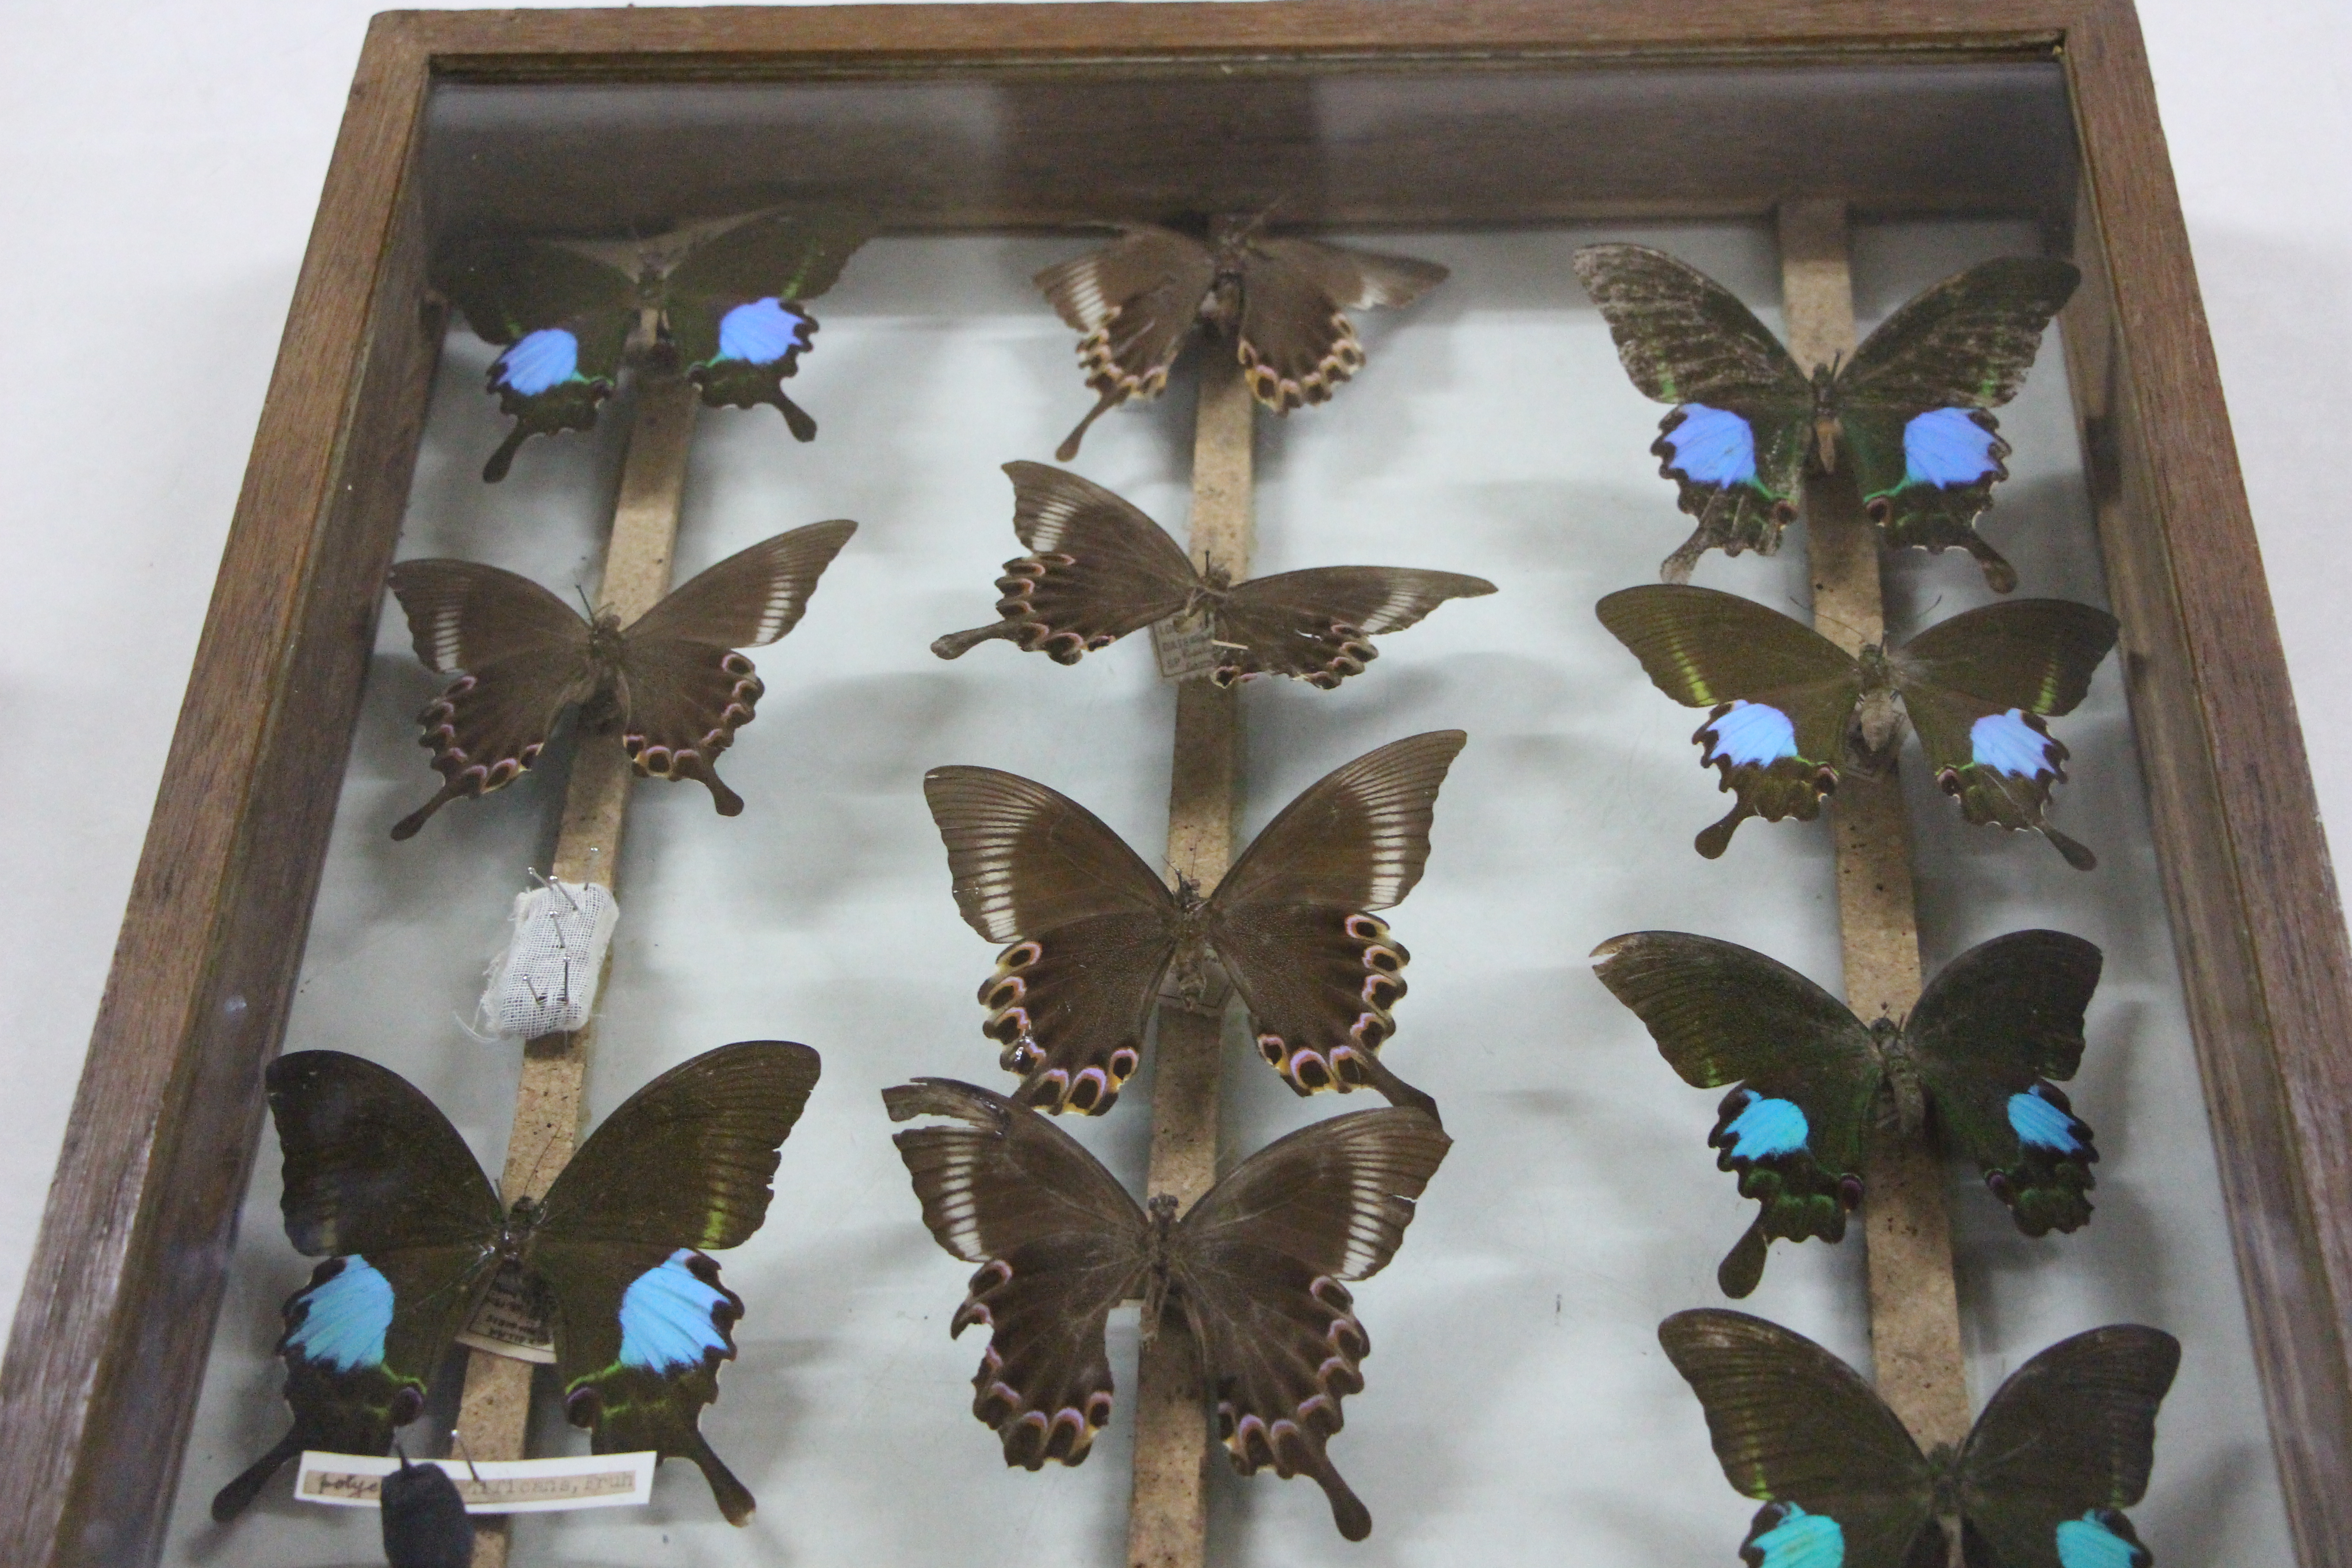 At the Bombay Natural History Society, Mumbai (Source: Sahapedia)